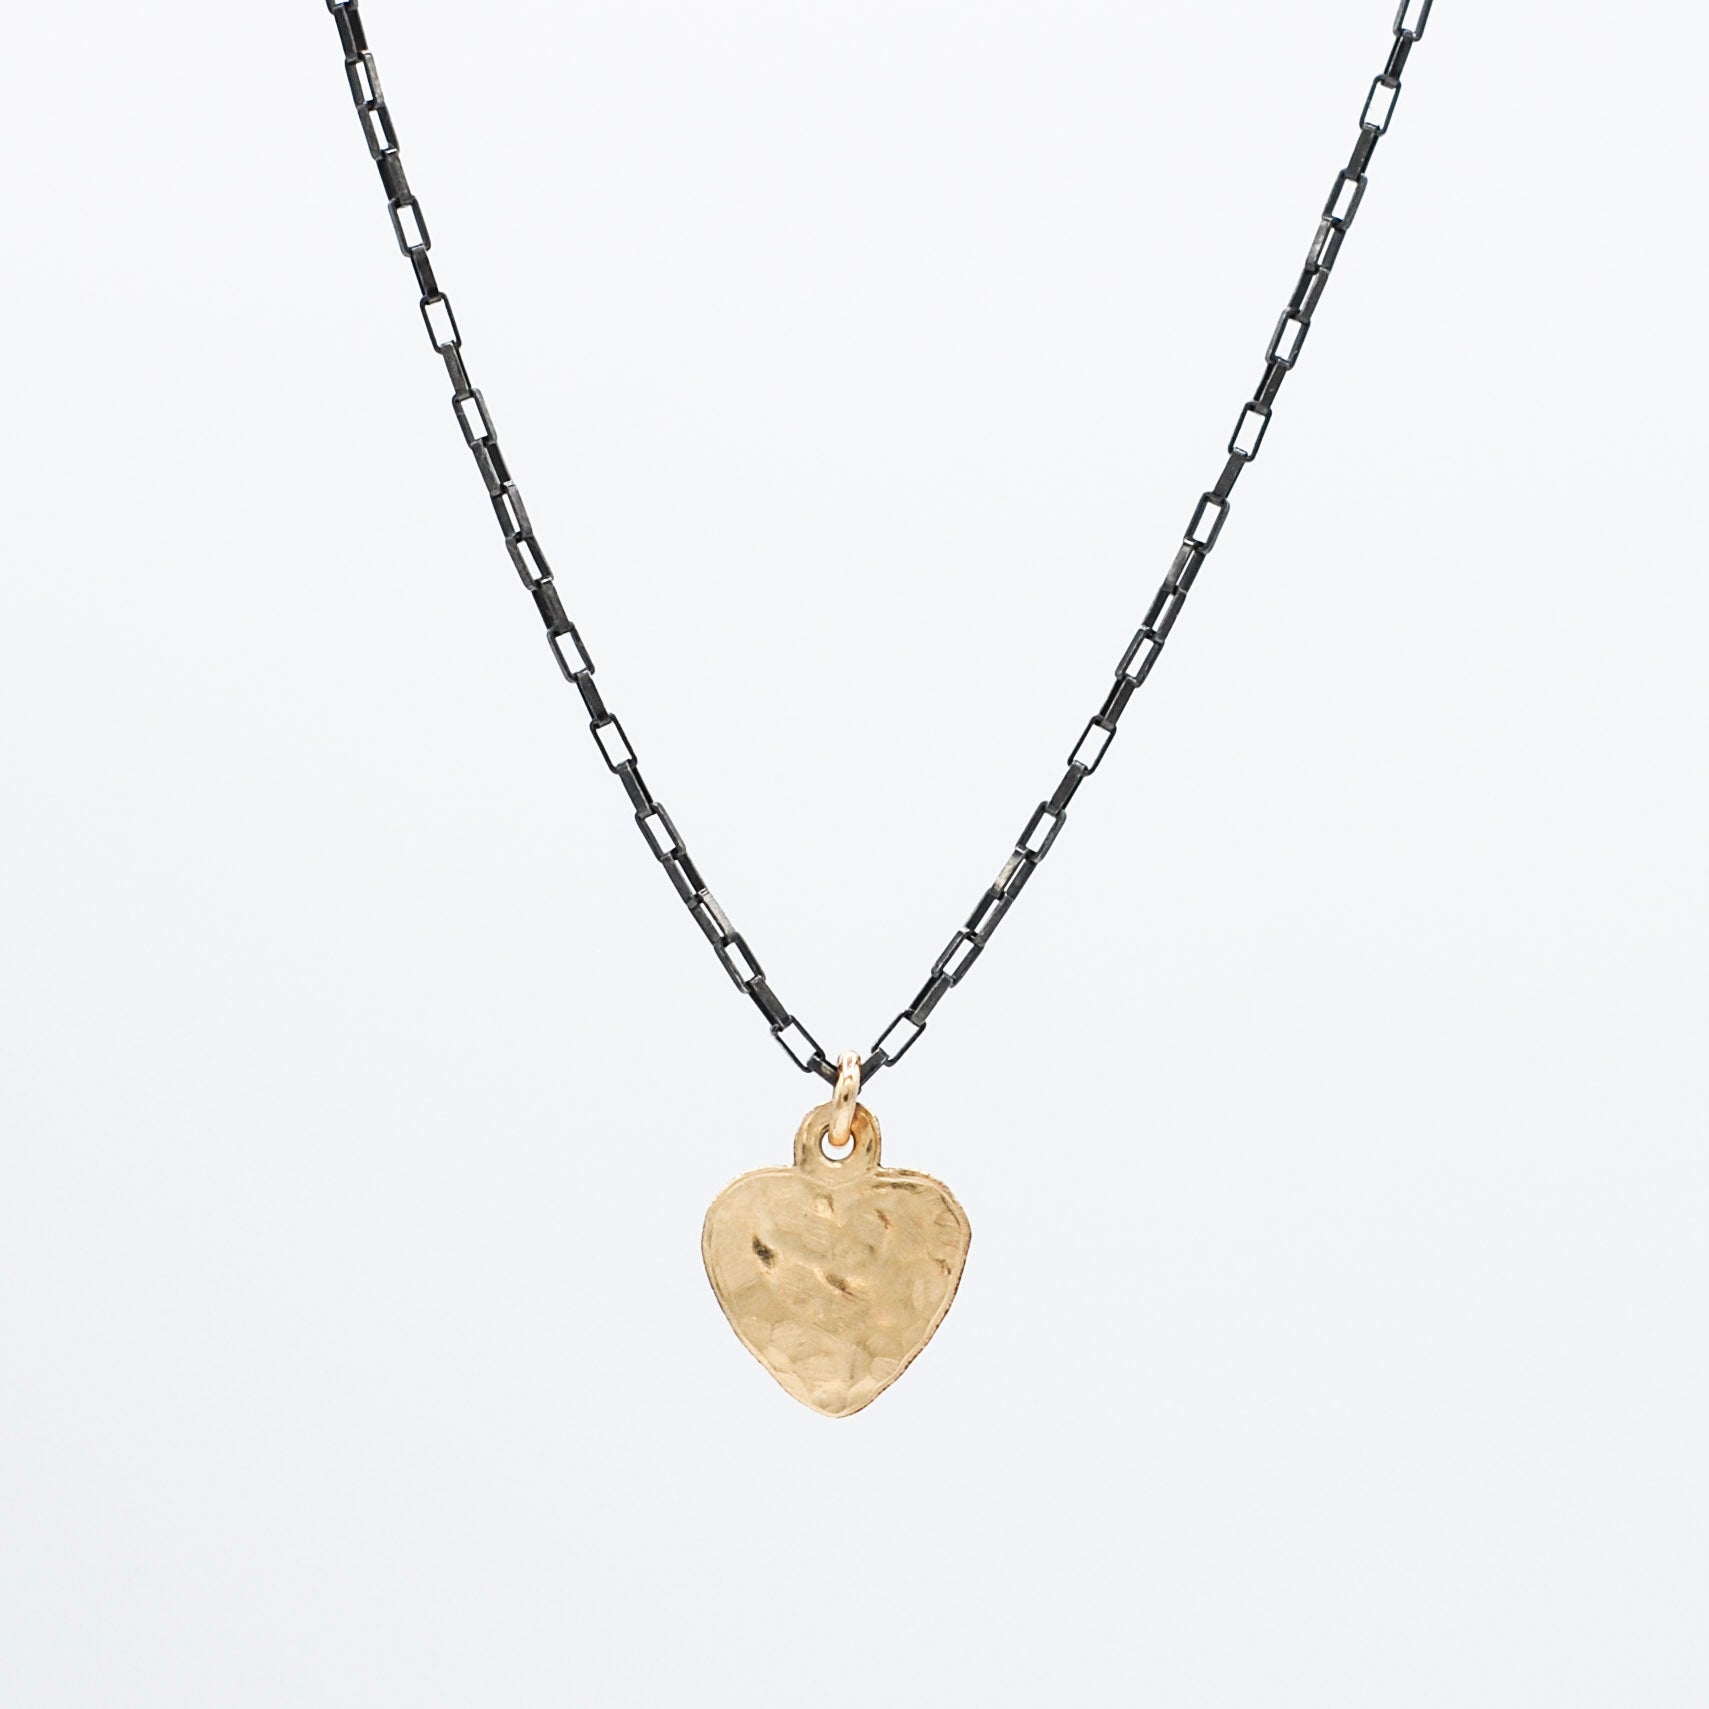 14k Gold Filled Heart Necklace & Earring Set